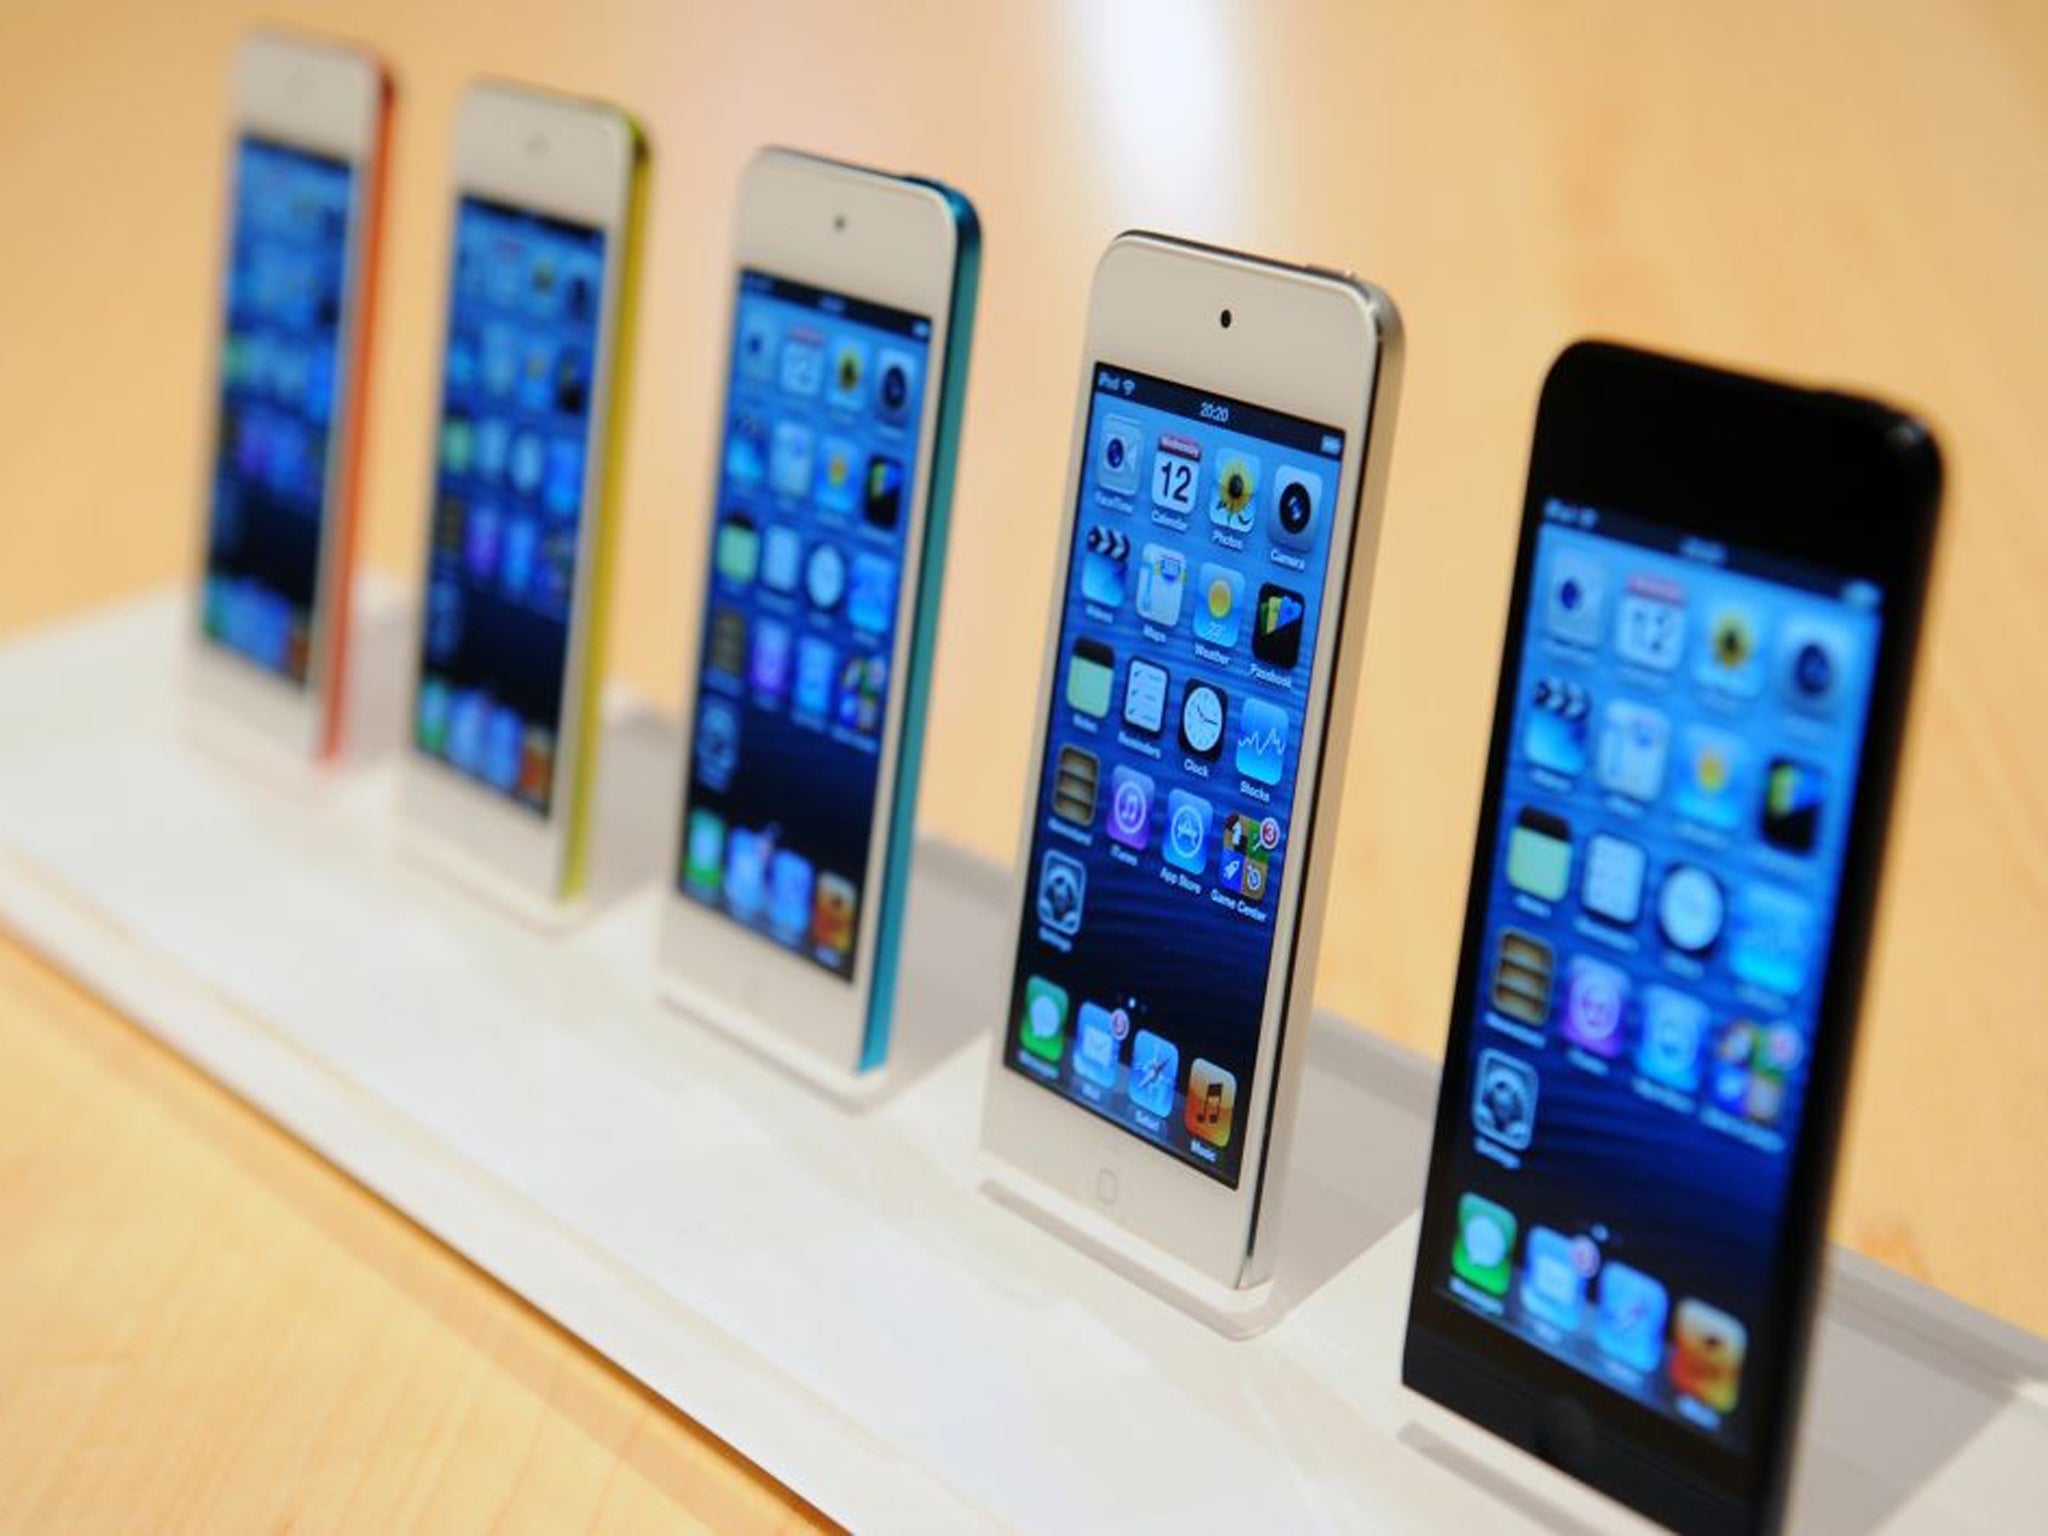 Apple iPhones on display